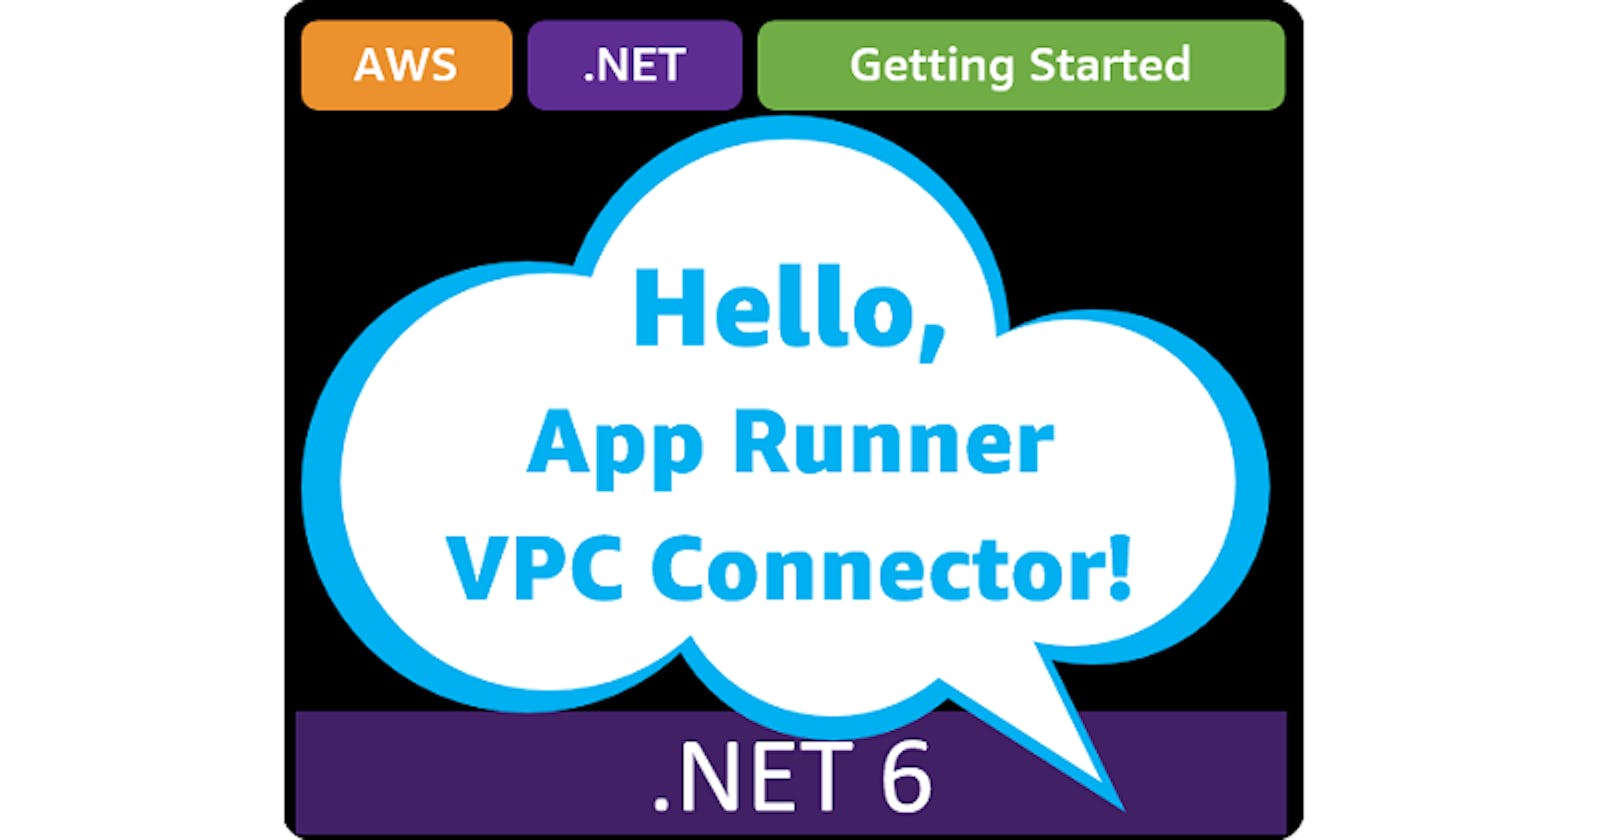 Hello, App Runner VPC Connector!